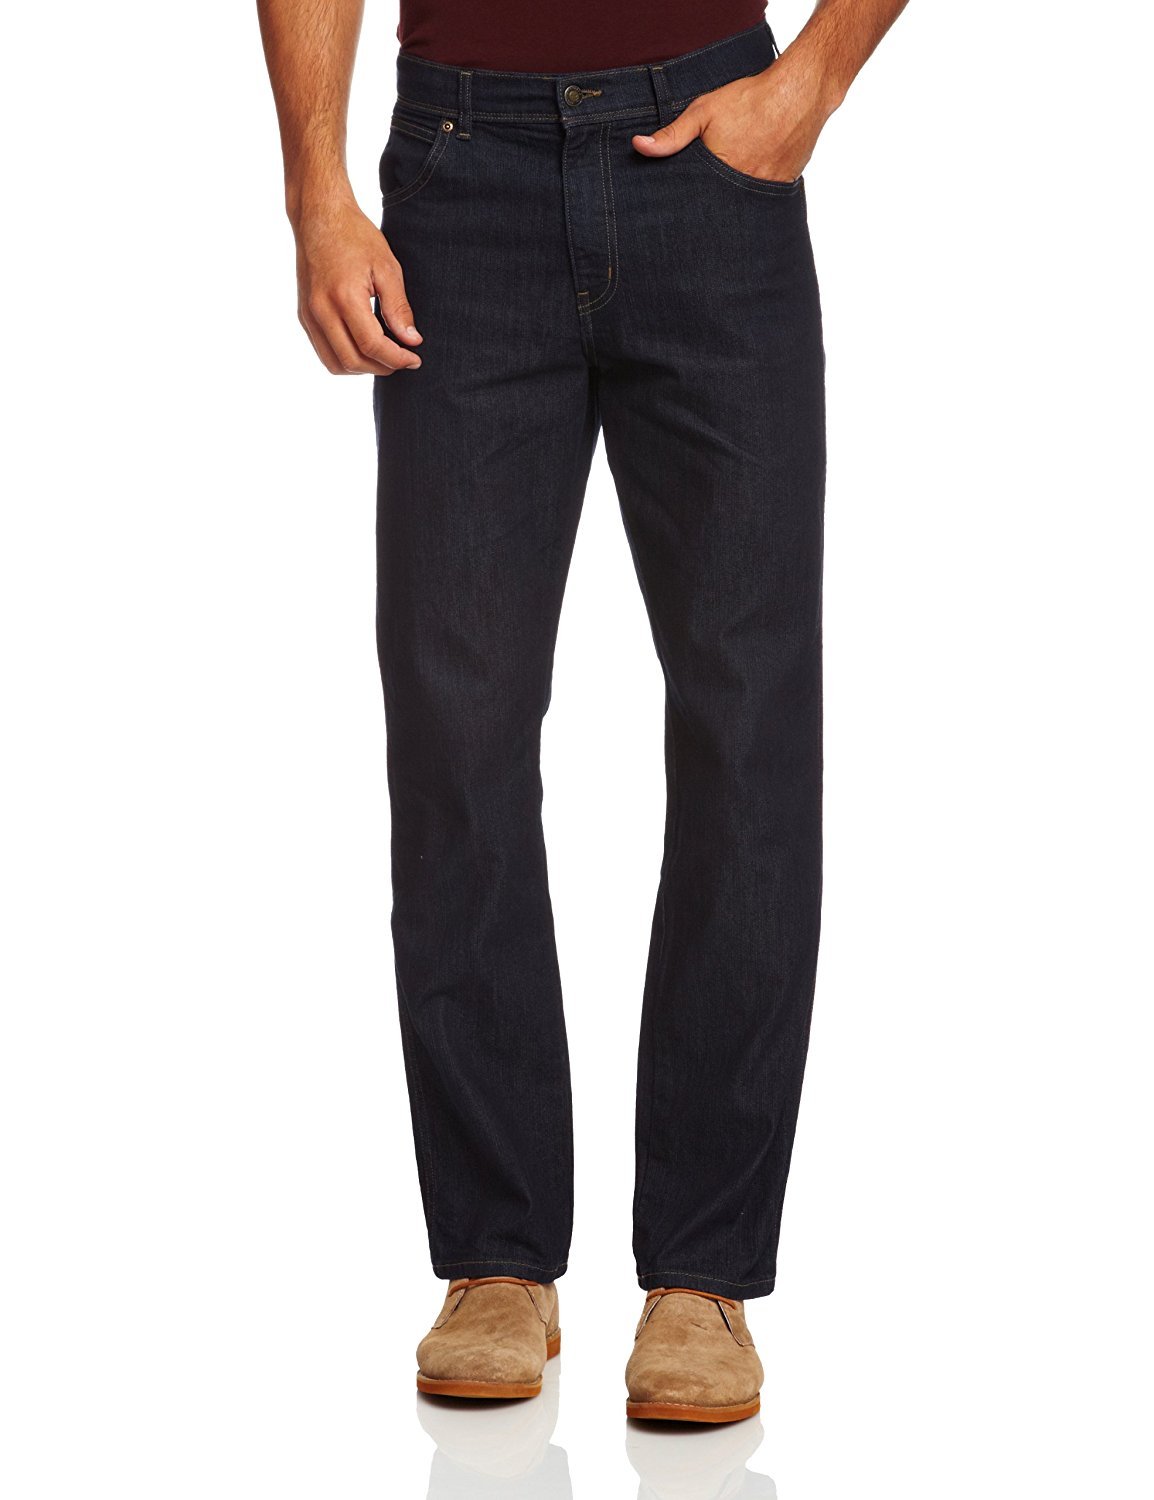 Wrangler Herren Regular Fit Jeans, Blau (Rinsewash), 42W / 30L